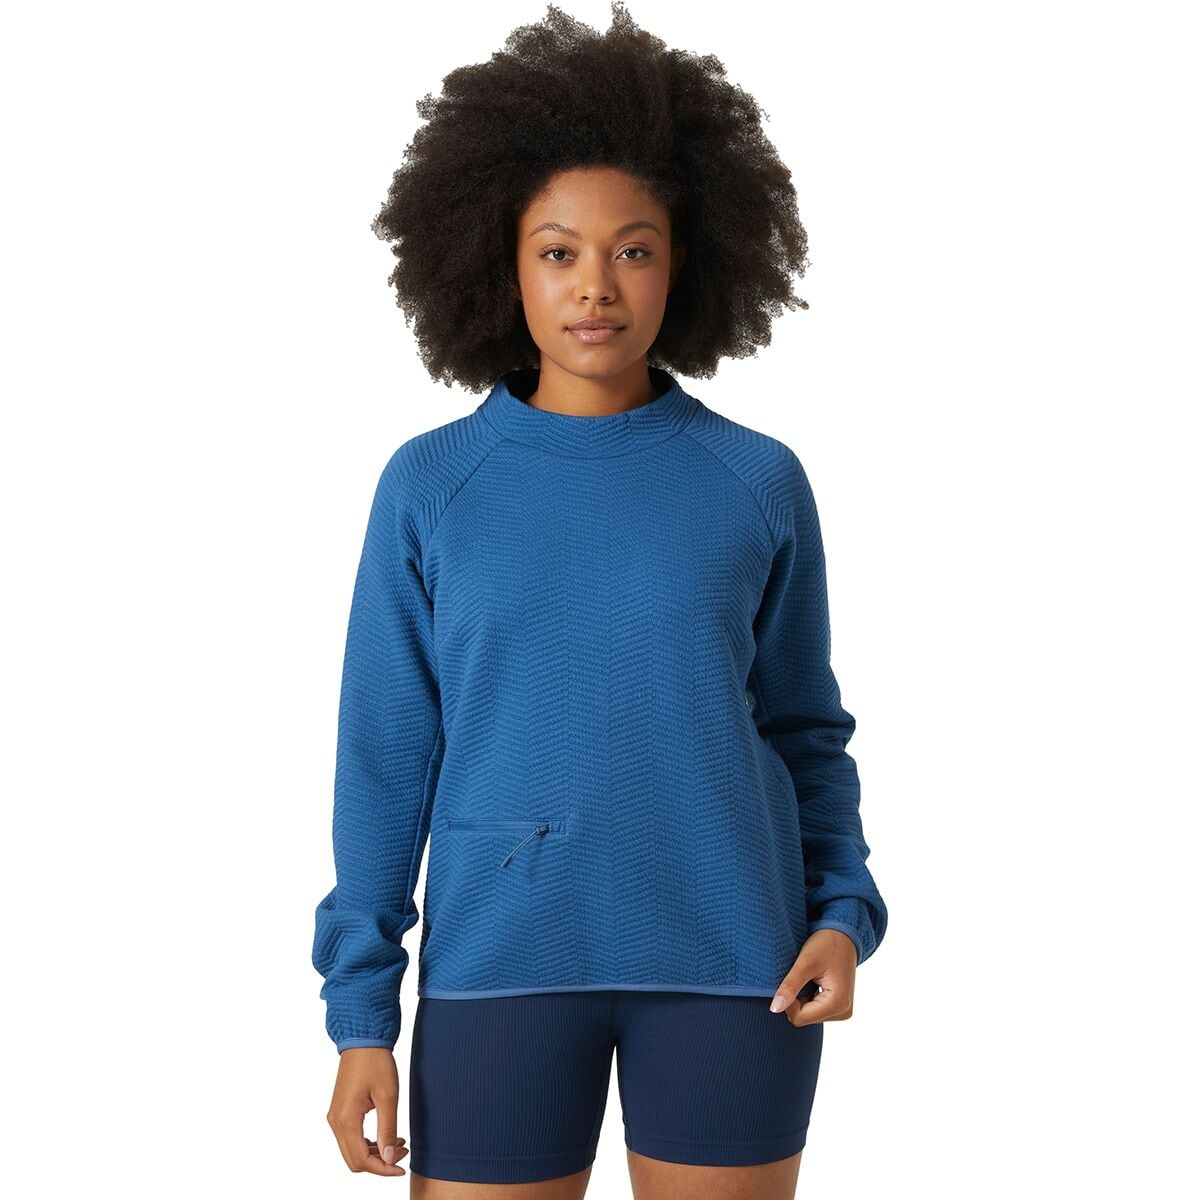 Allure Pullover Sweatshirt - Women